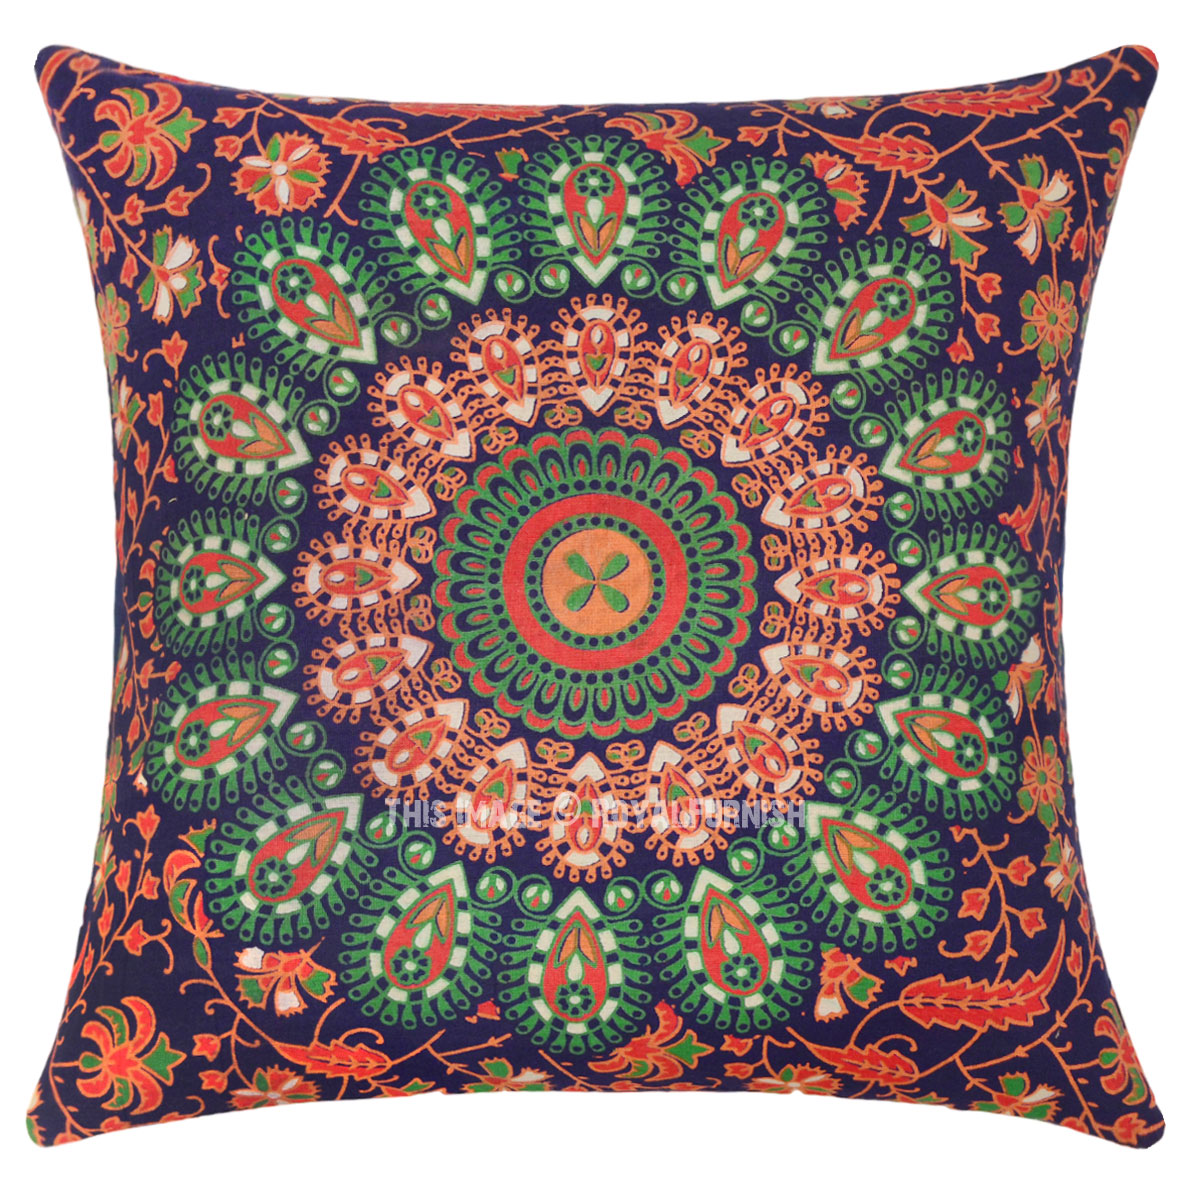 Blue & Orange Decorative Mandala Throw Pillow Cover - RoyalFurnish.com